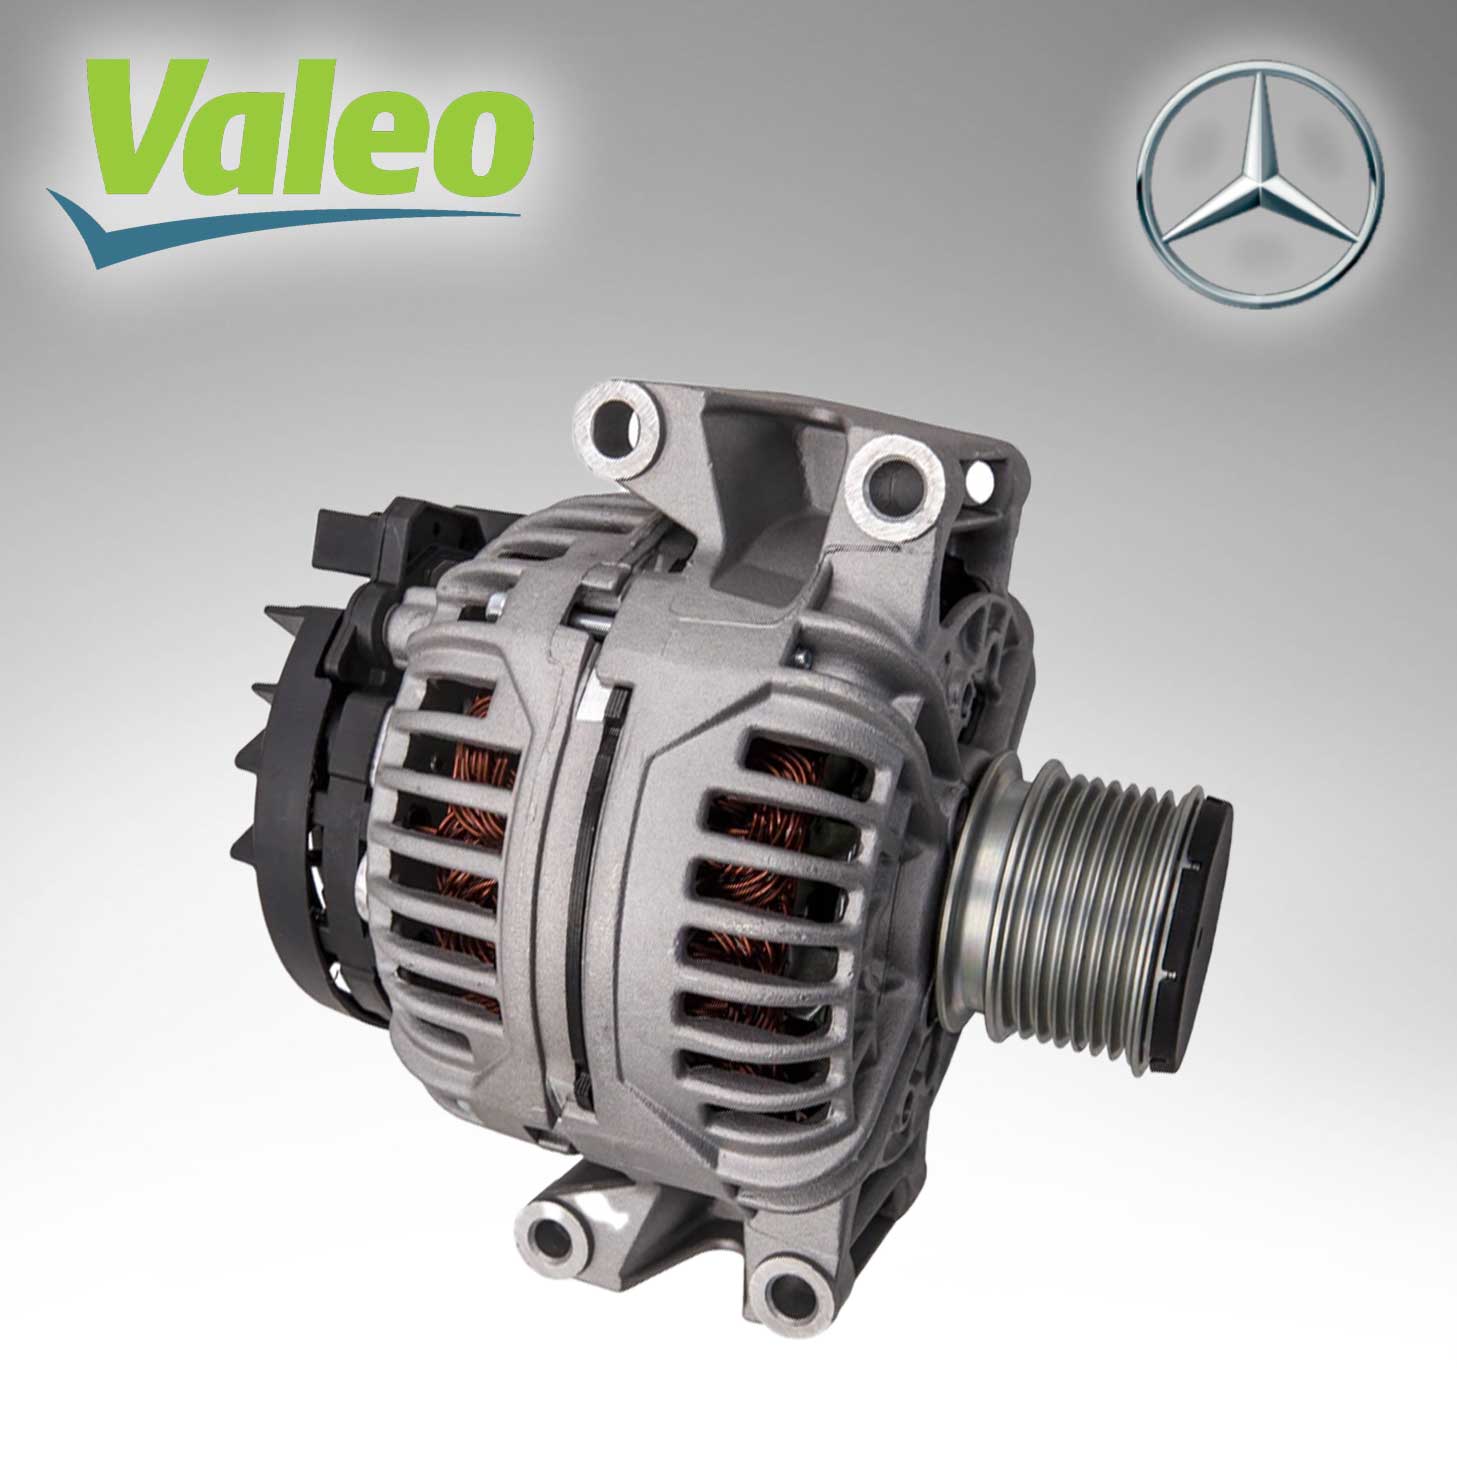 Valeo ALTERNATOR (VALEO # 439471) For Mercedes Benz C230 2711540802